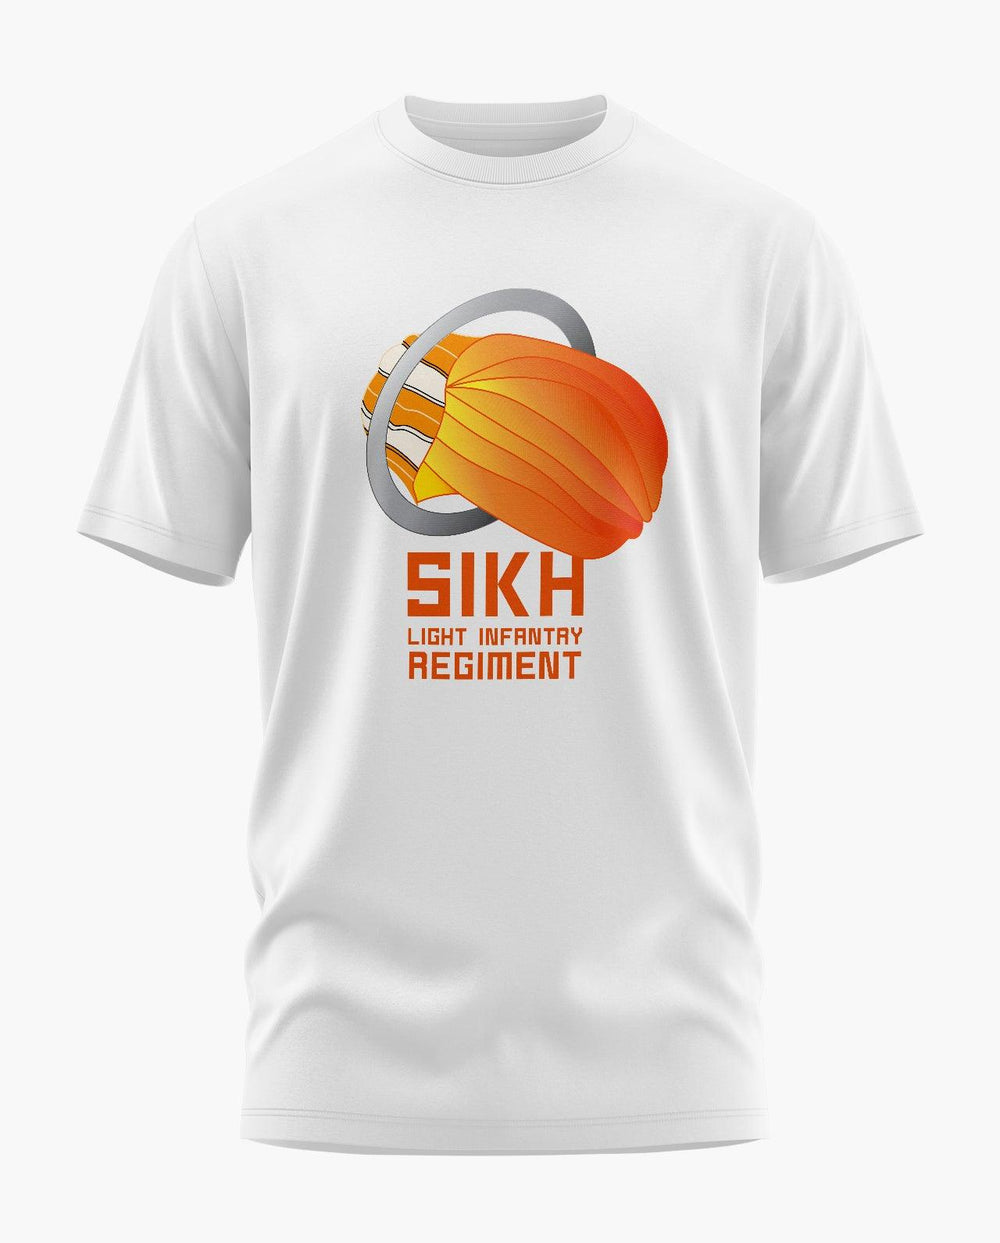 Sikh Li Regiment T-Shirt - Aero Armour